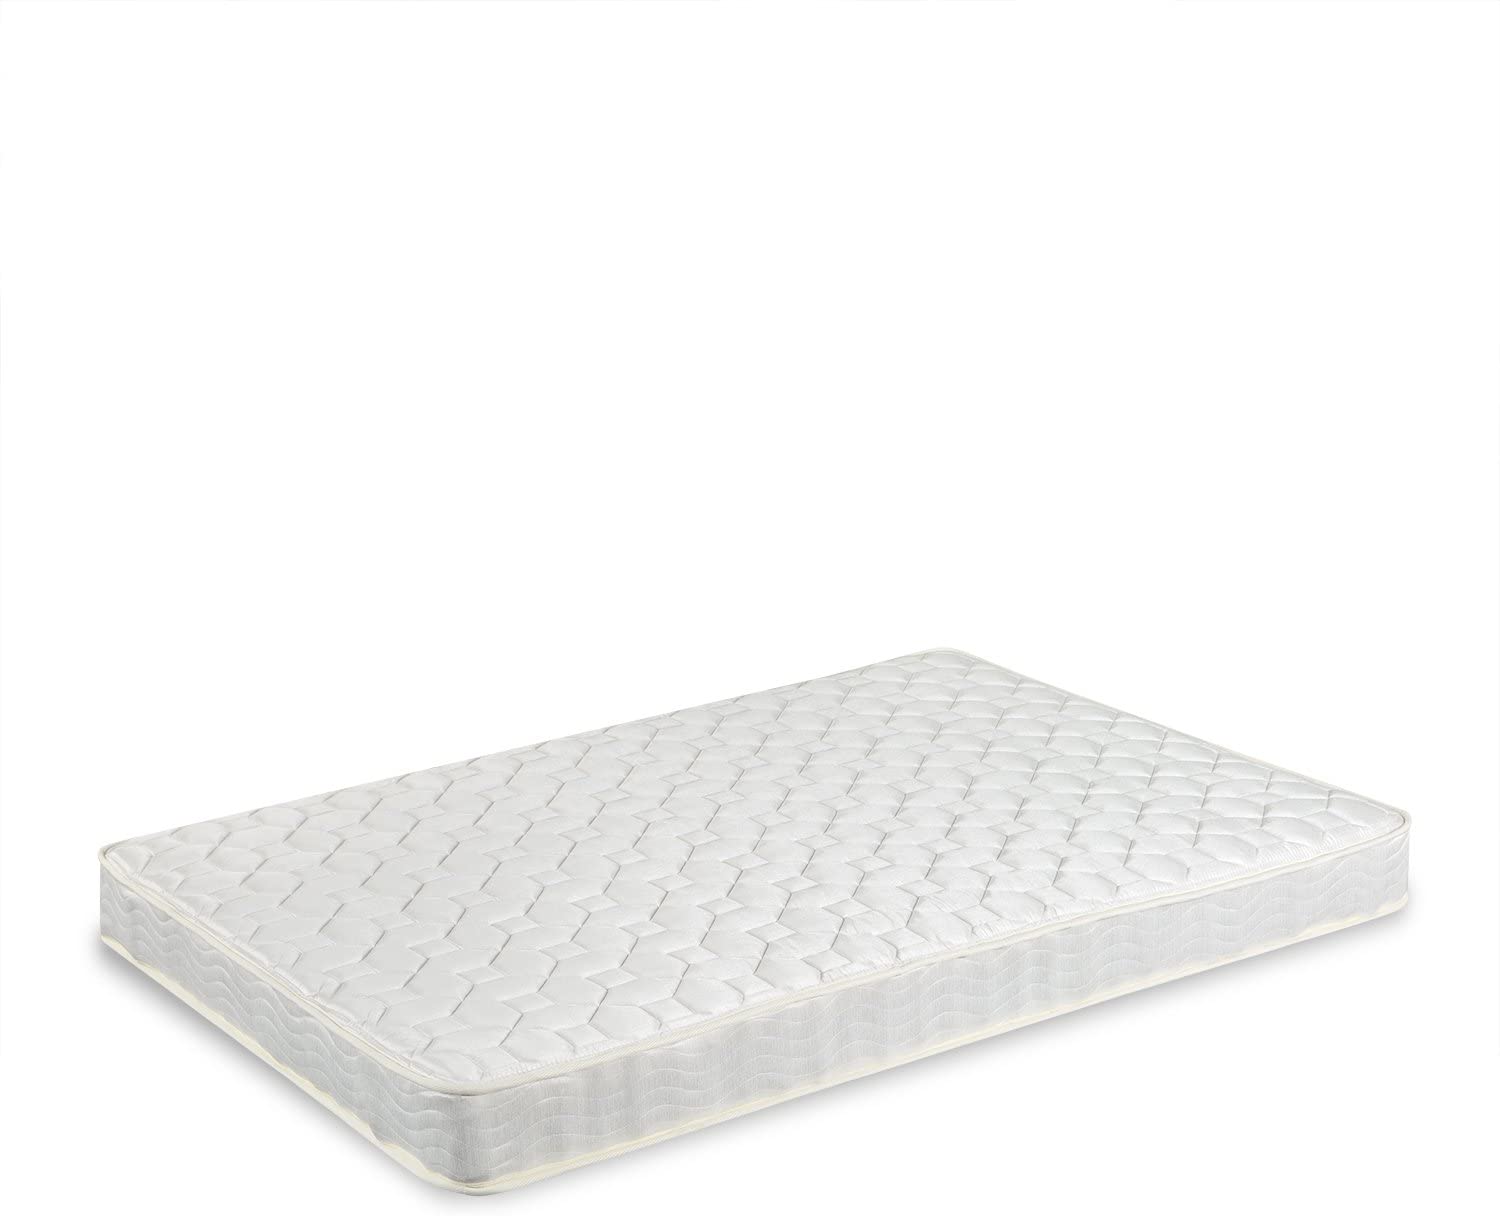 zinus 6 inch spring mattress review